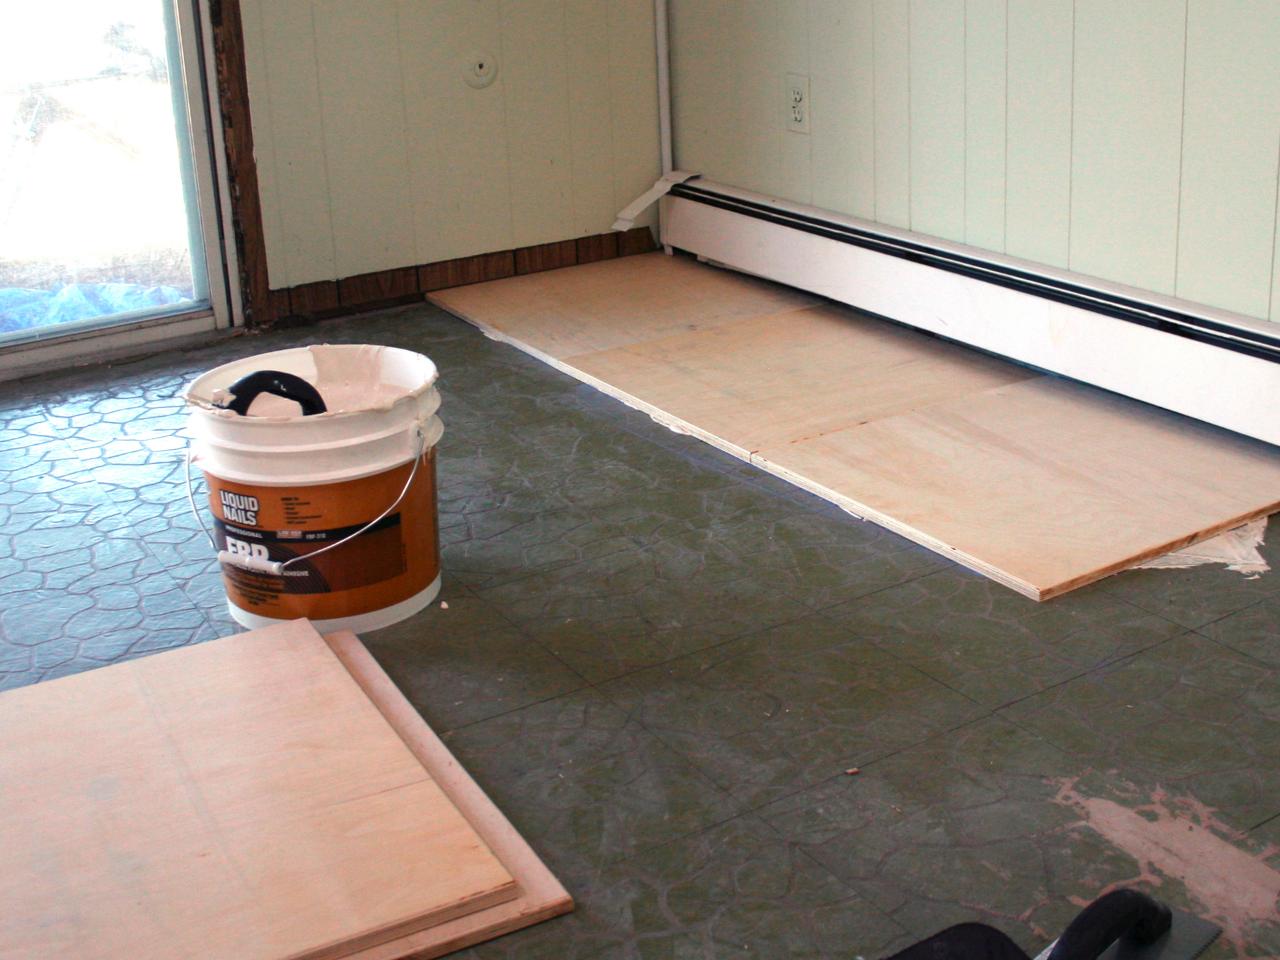 How To Install Plywood Floor Tiles, Laying Tile On Hardwood Floor